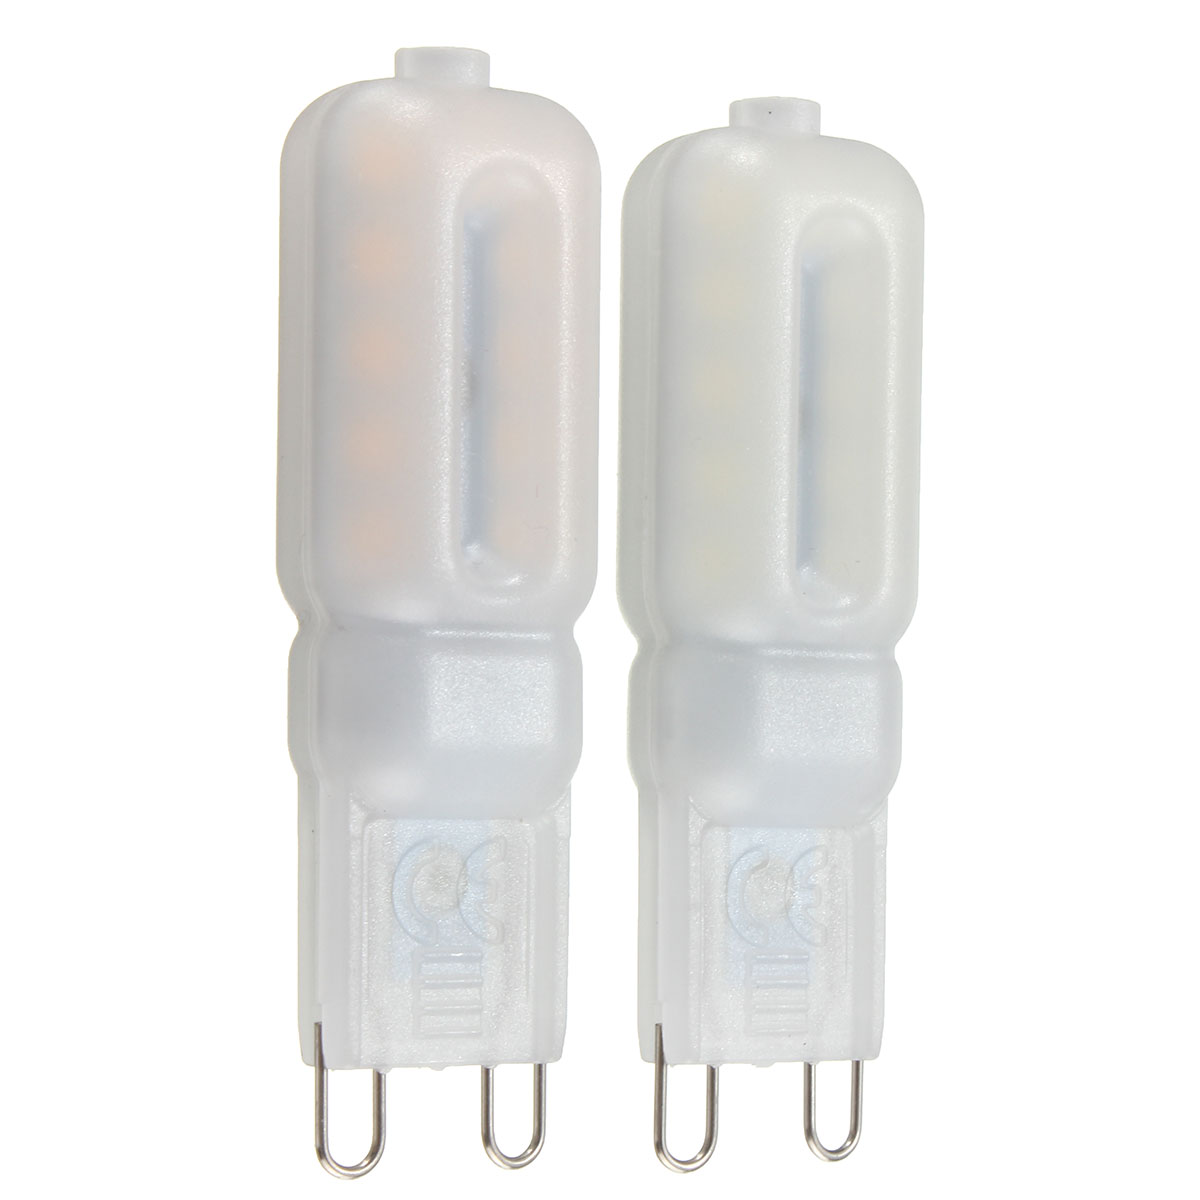 G9-5W-22-SMD-2835-LED-Pure-White-Warm-White-440Lm-Light-Lamp-Bulb-AC220V-1061537-5